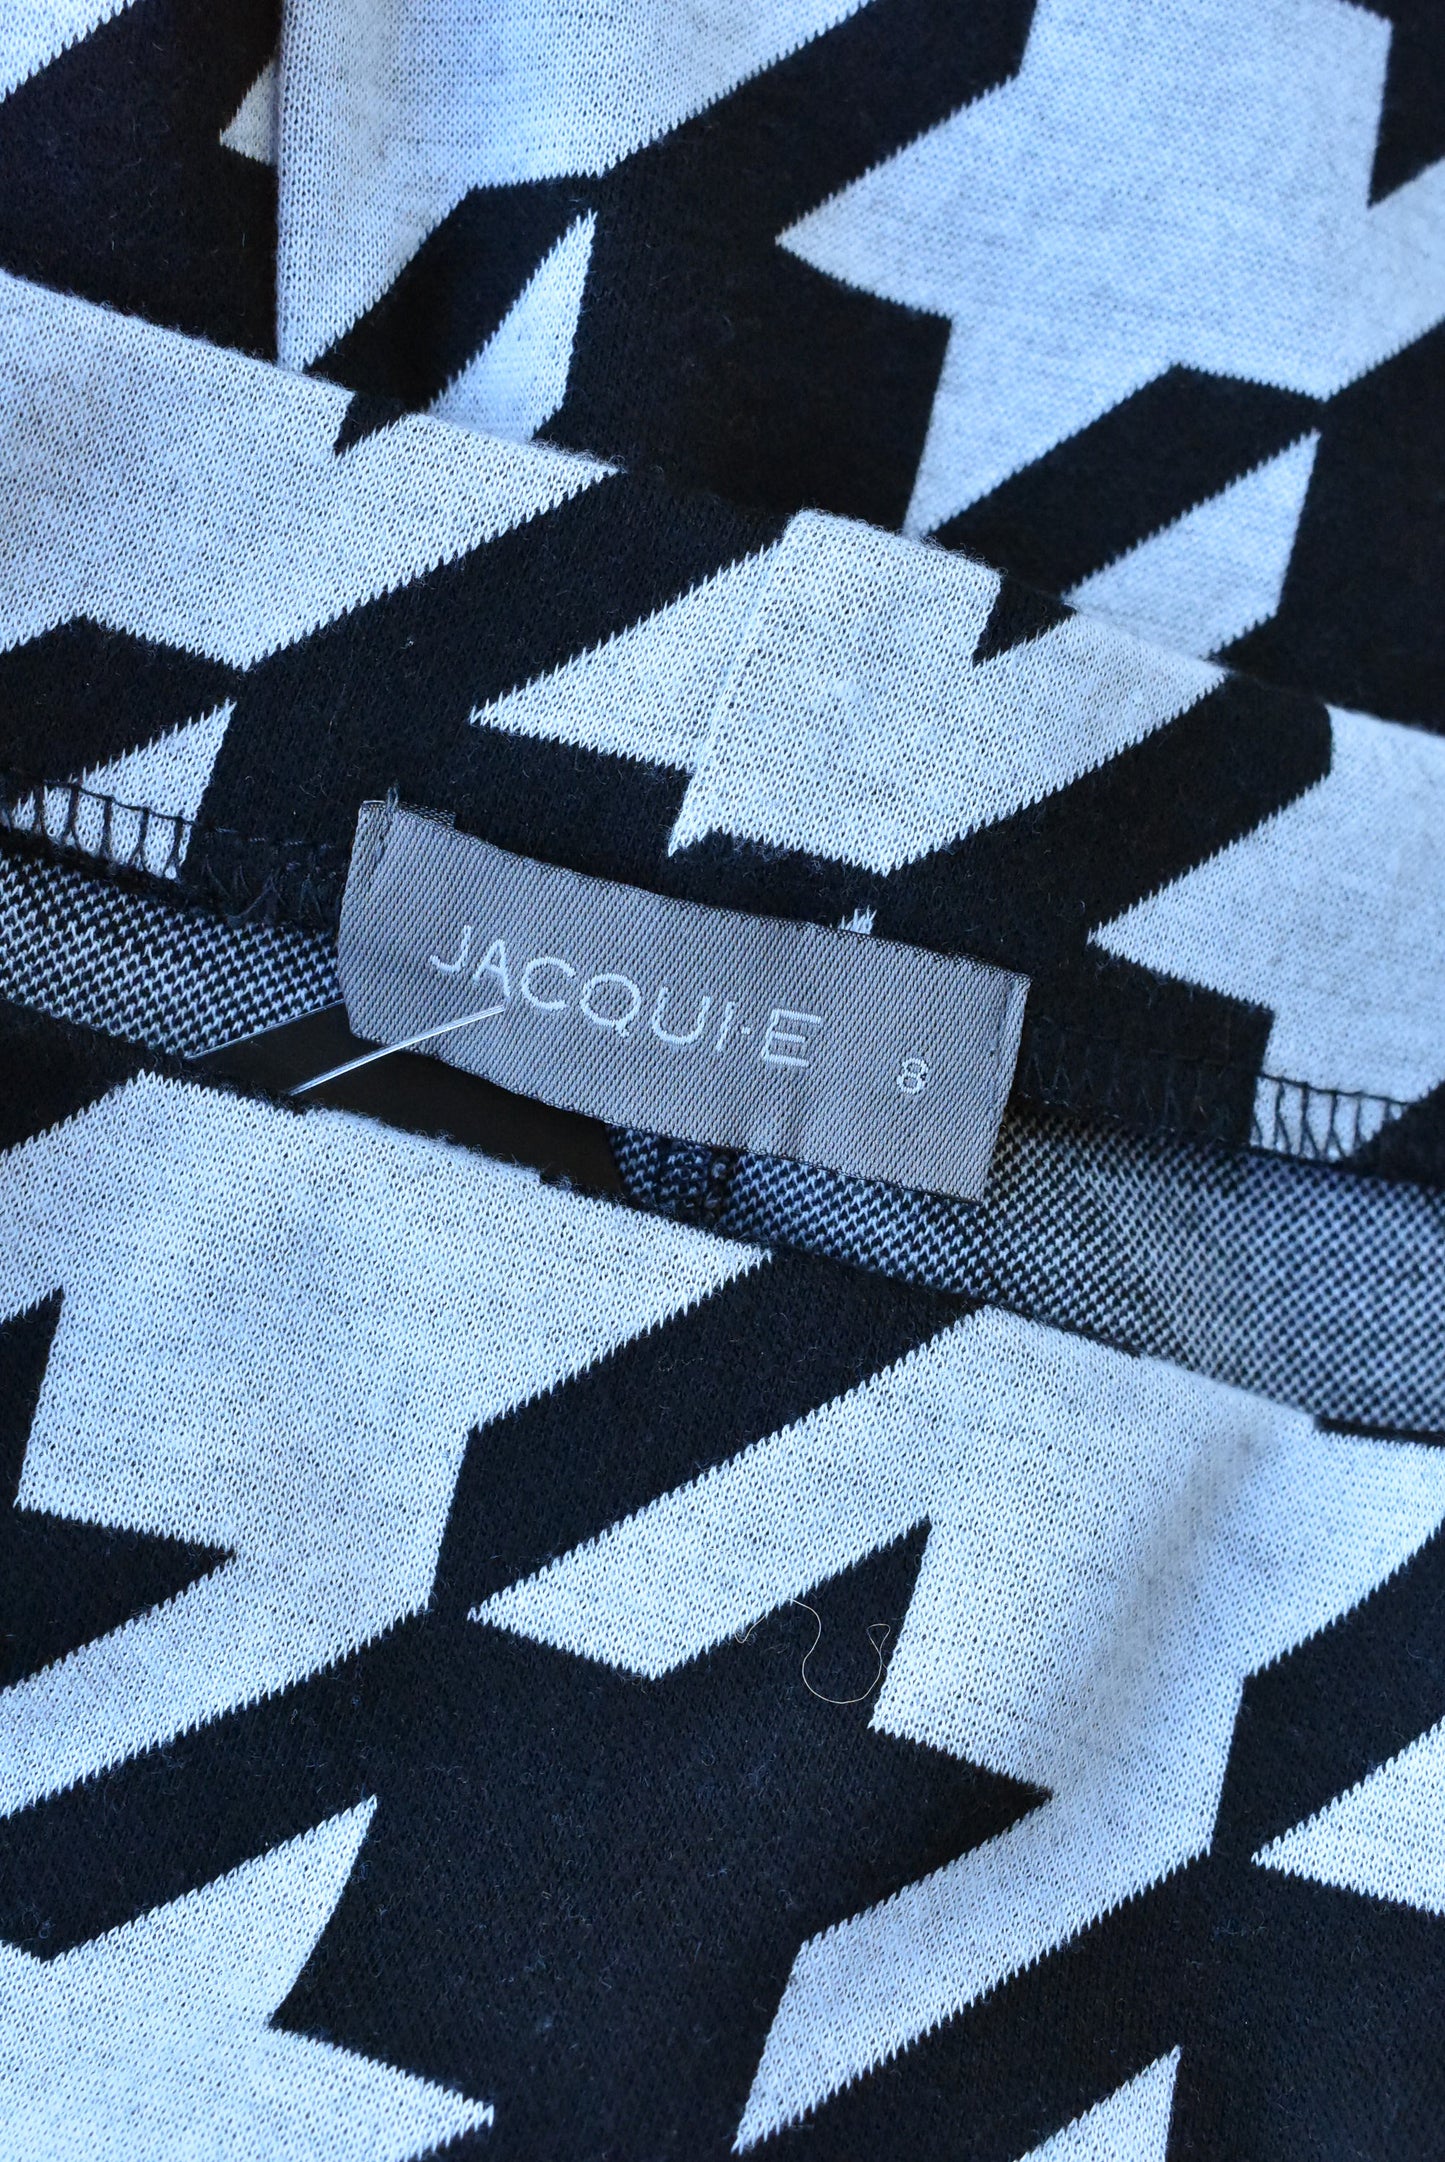 Jacqui E grey houndstooth skirt, size 8